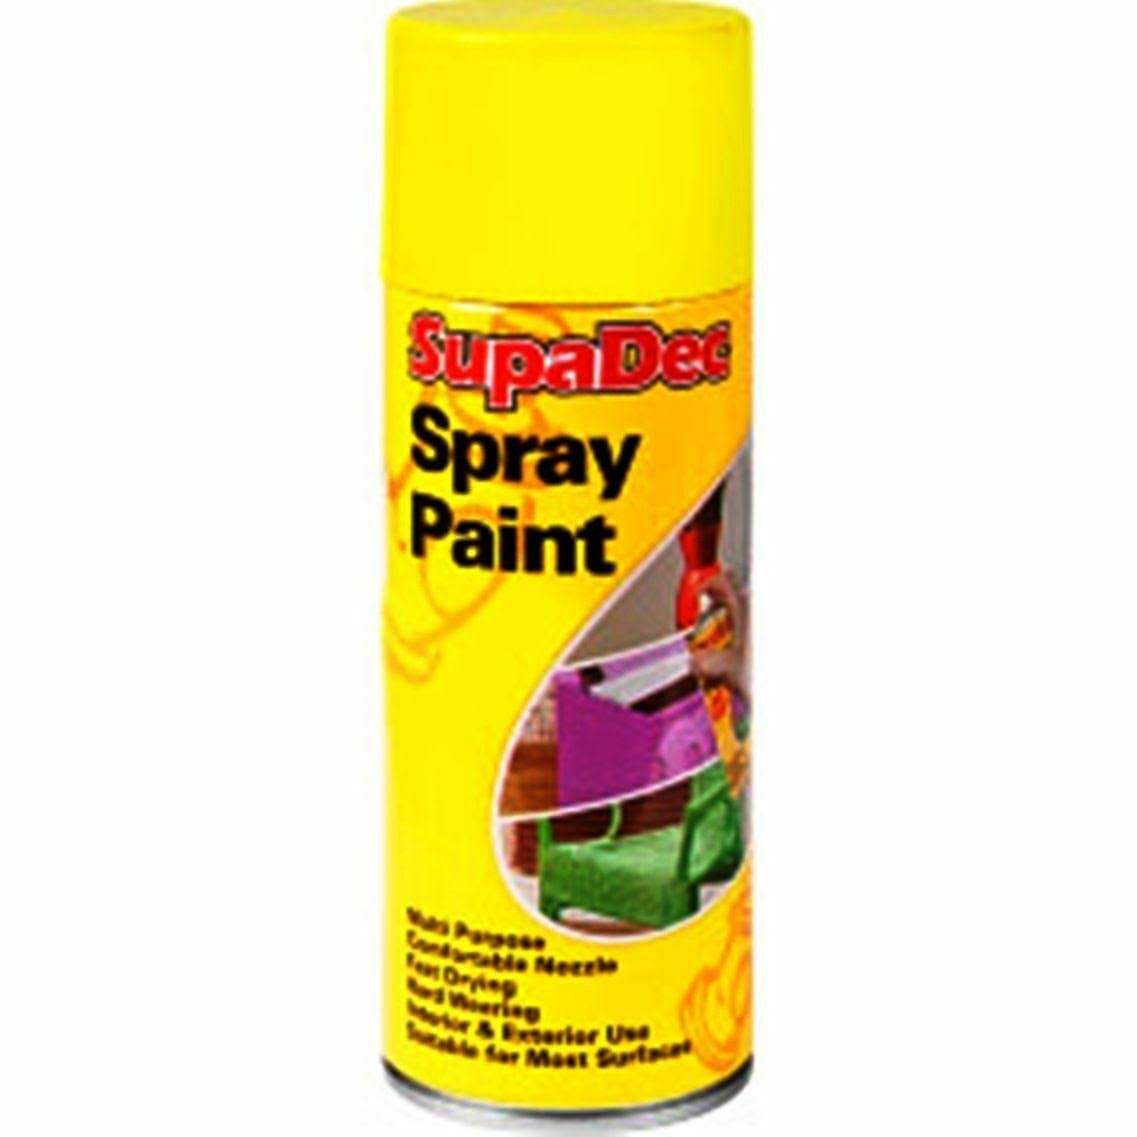 SupaDec Spray Paint - 400ml Yellow